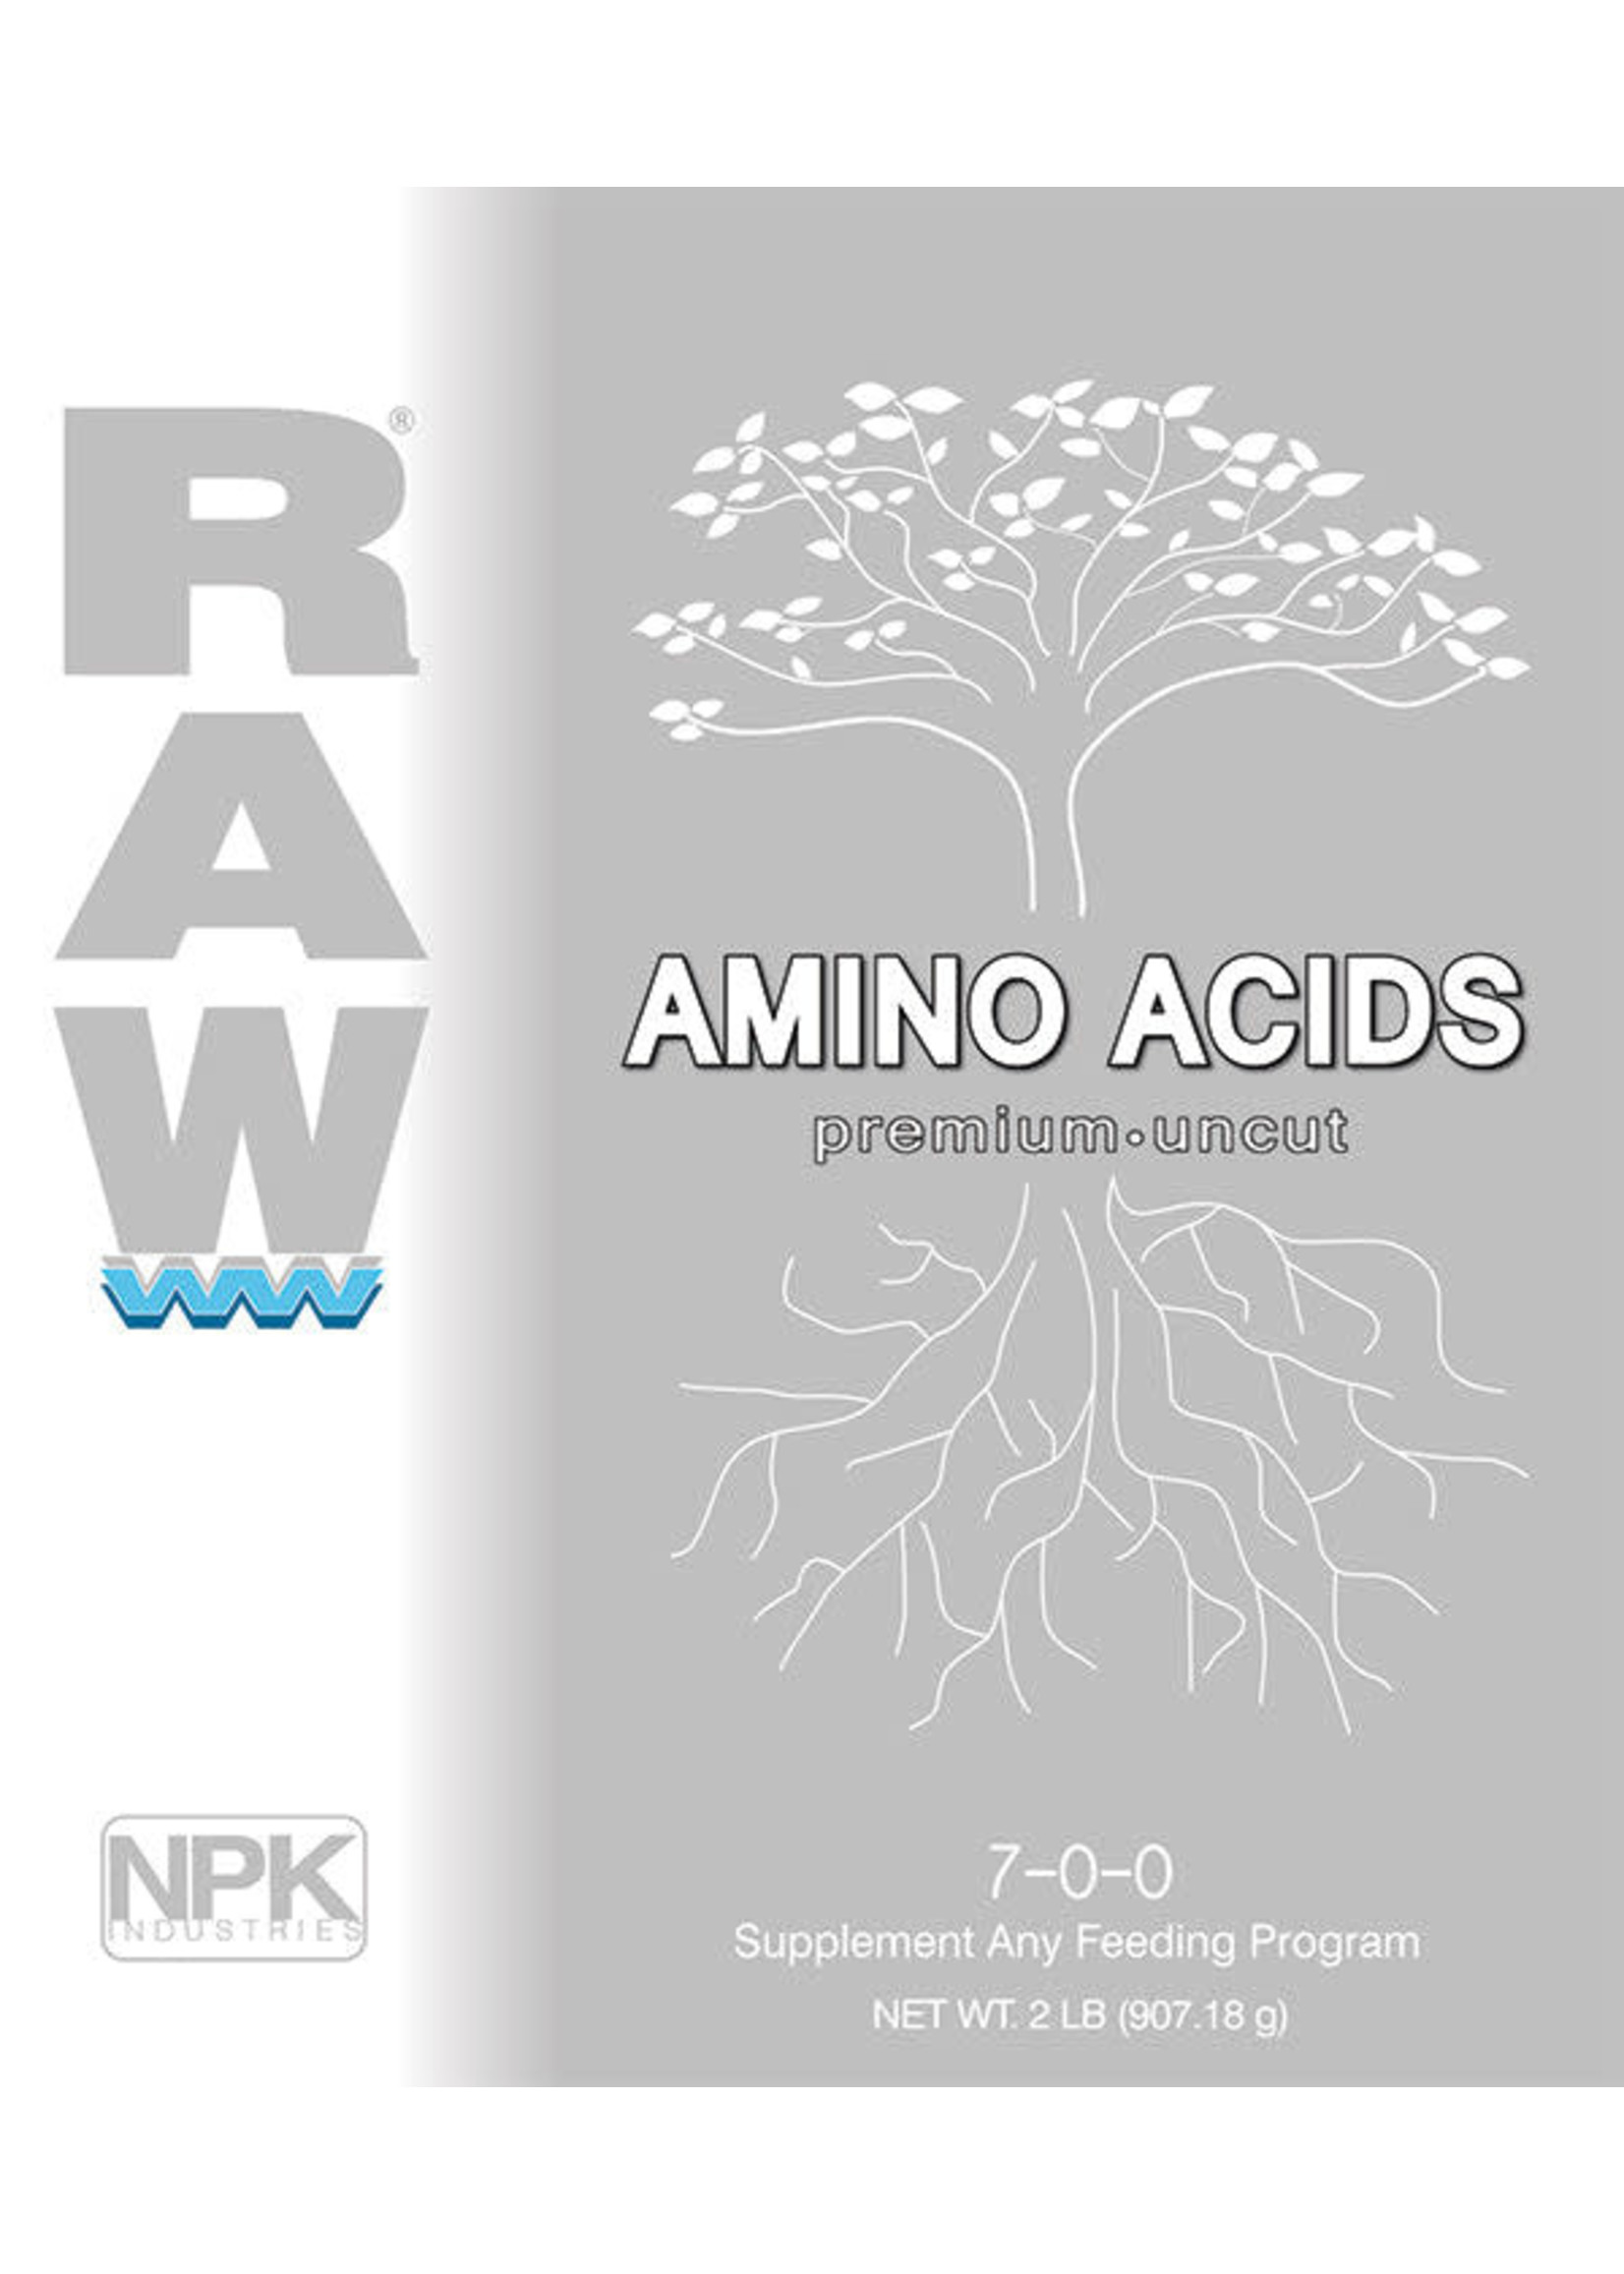 NPK RAW Amino Acids